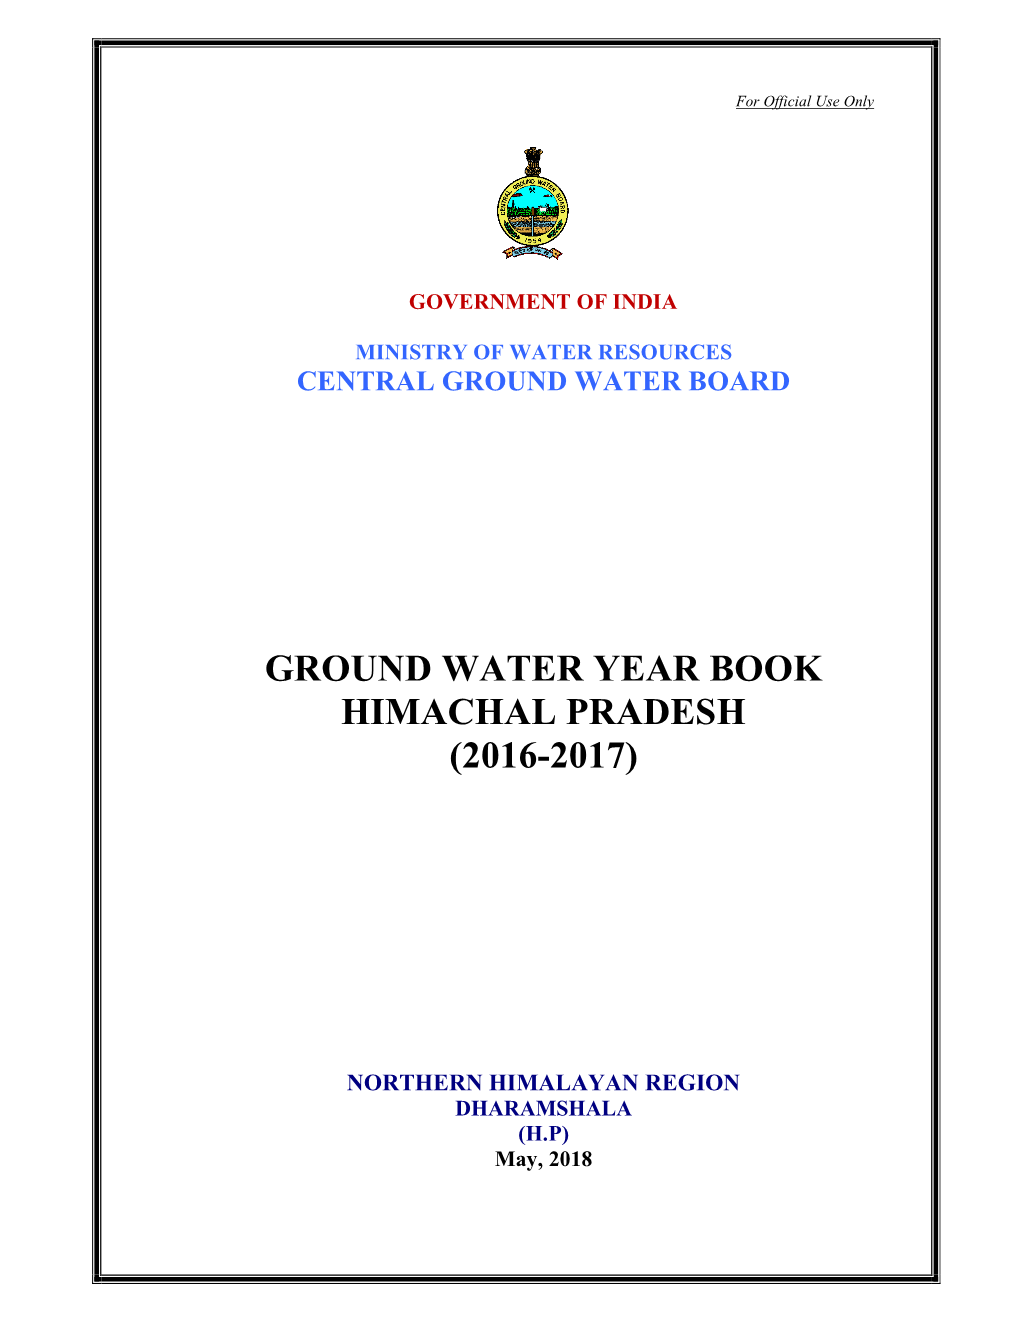 Ground Water Year Book Himachal Pradesh (2016-2017)